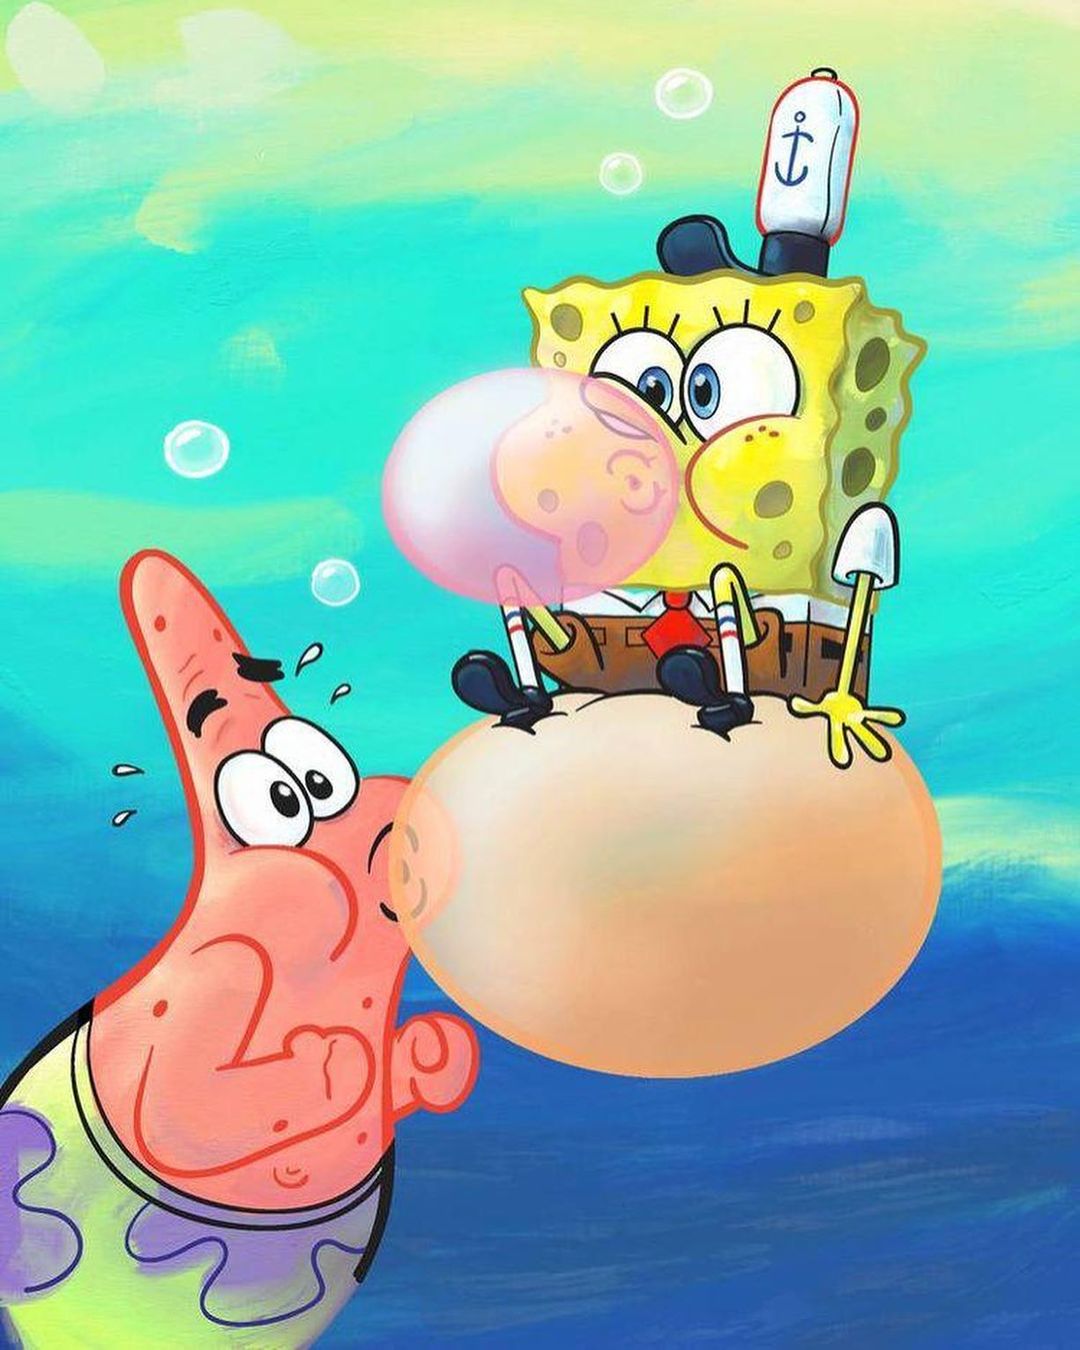 SpongeBob and Patrick blow their bubblegum, with SpongeBob sitting on Patrick’s bubble